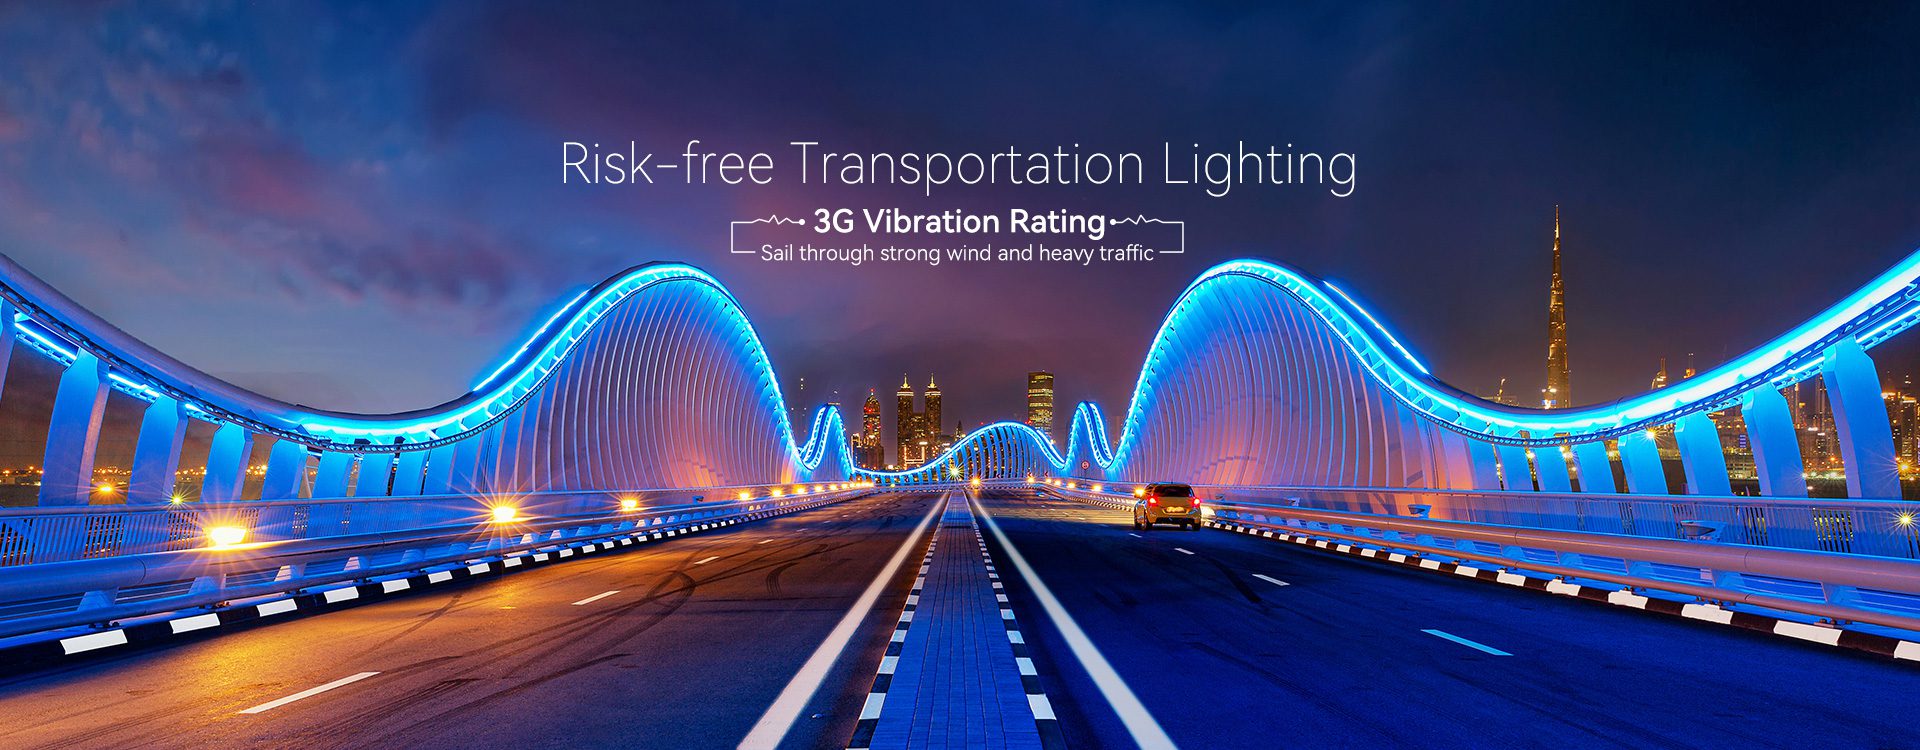 transportation lighting with bridge lighting